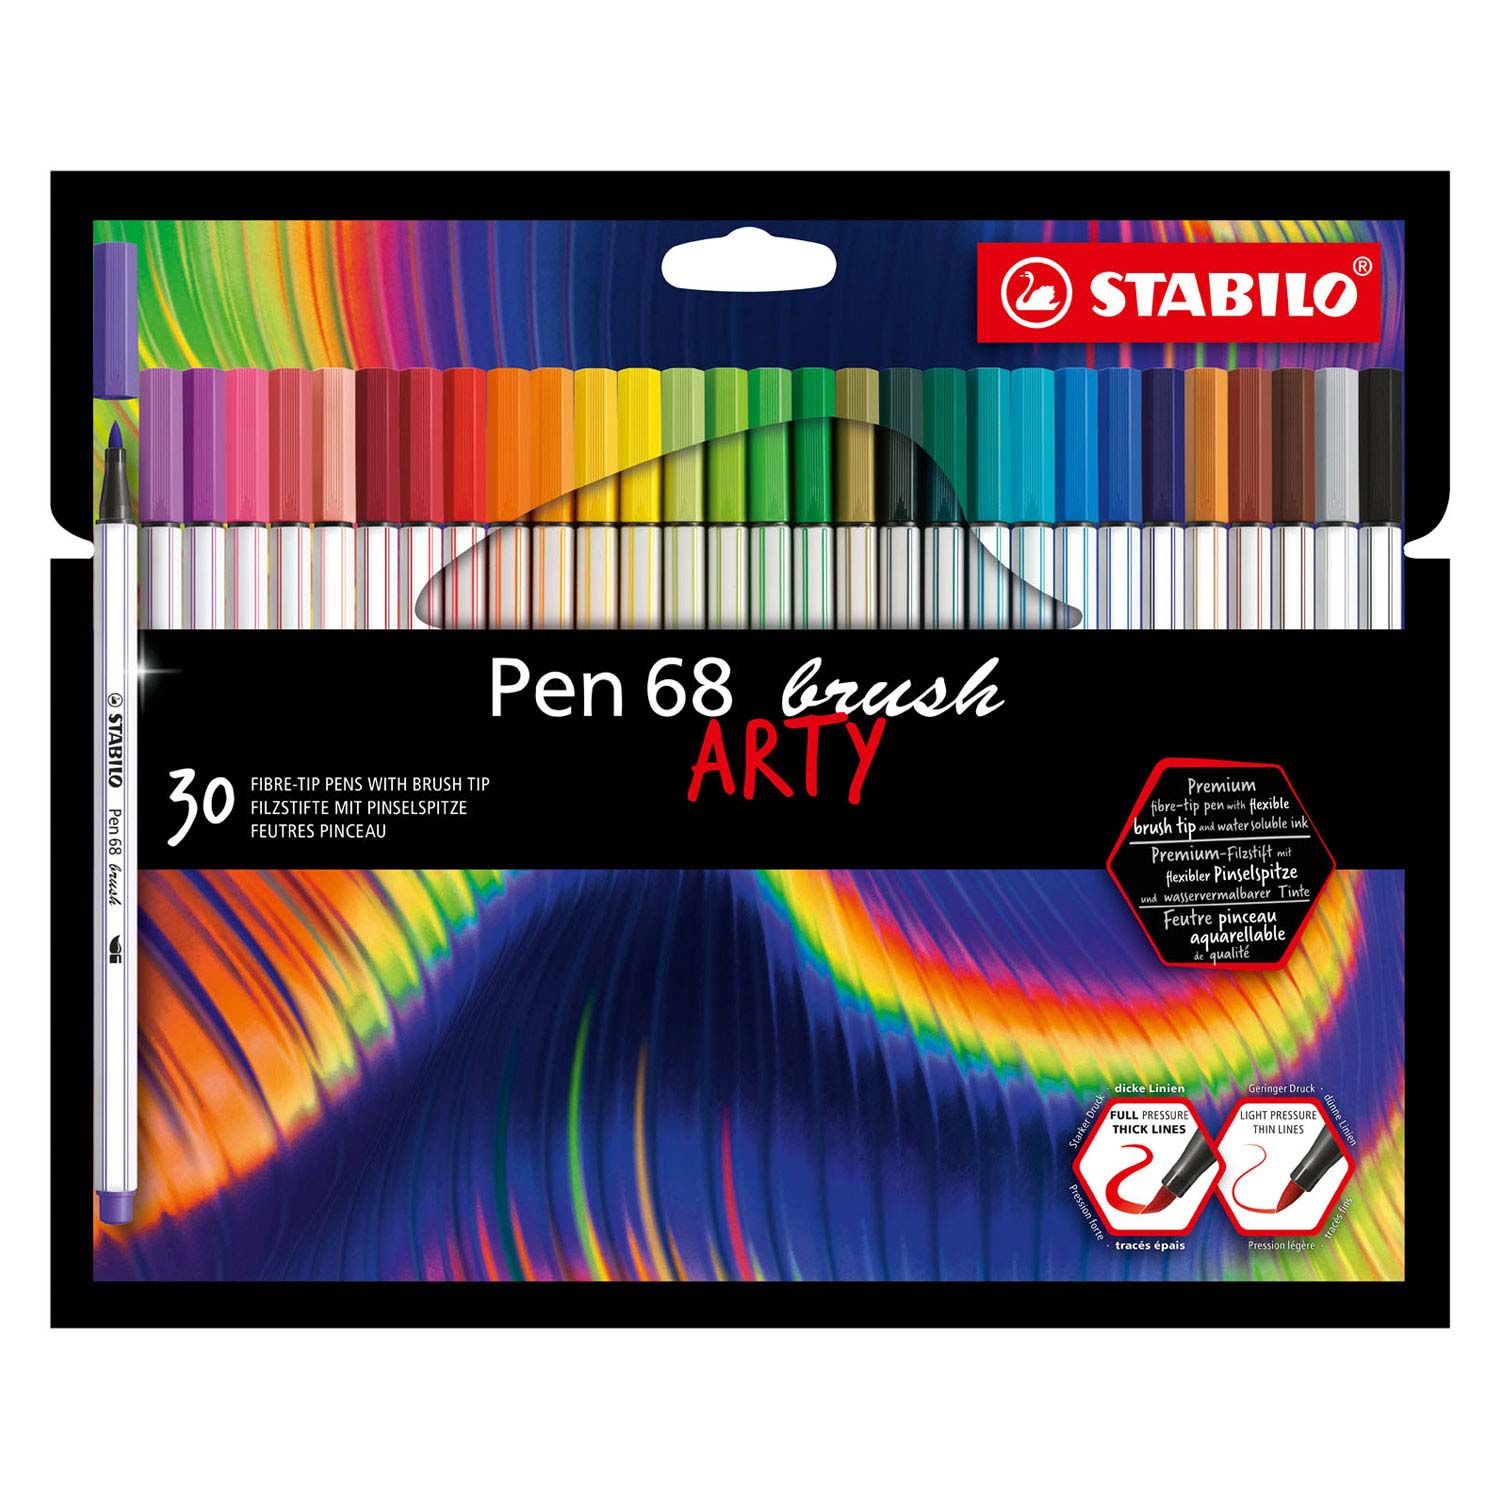 Stabilo Pen 68 Brush Pen Set - Arty, Set of 10